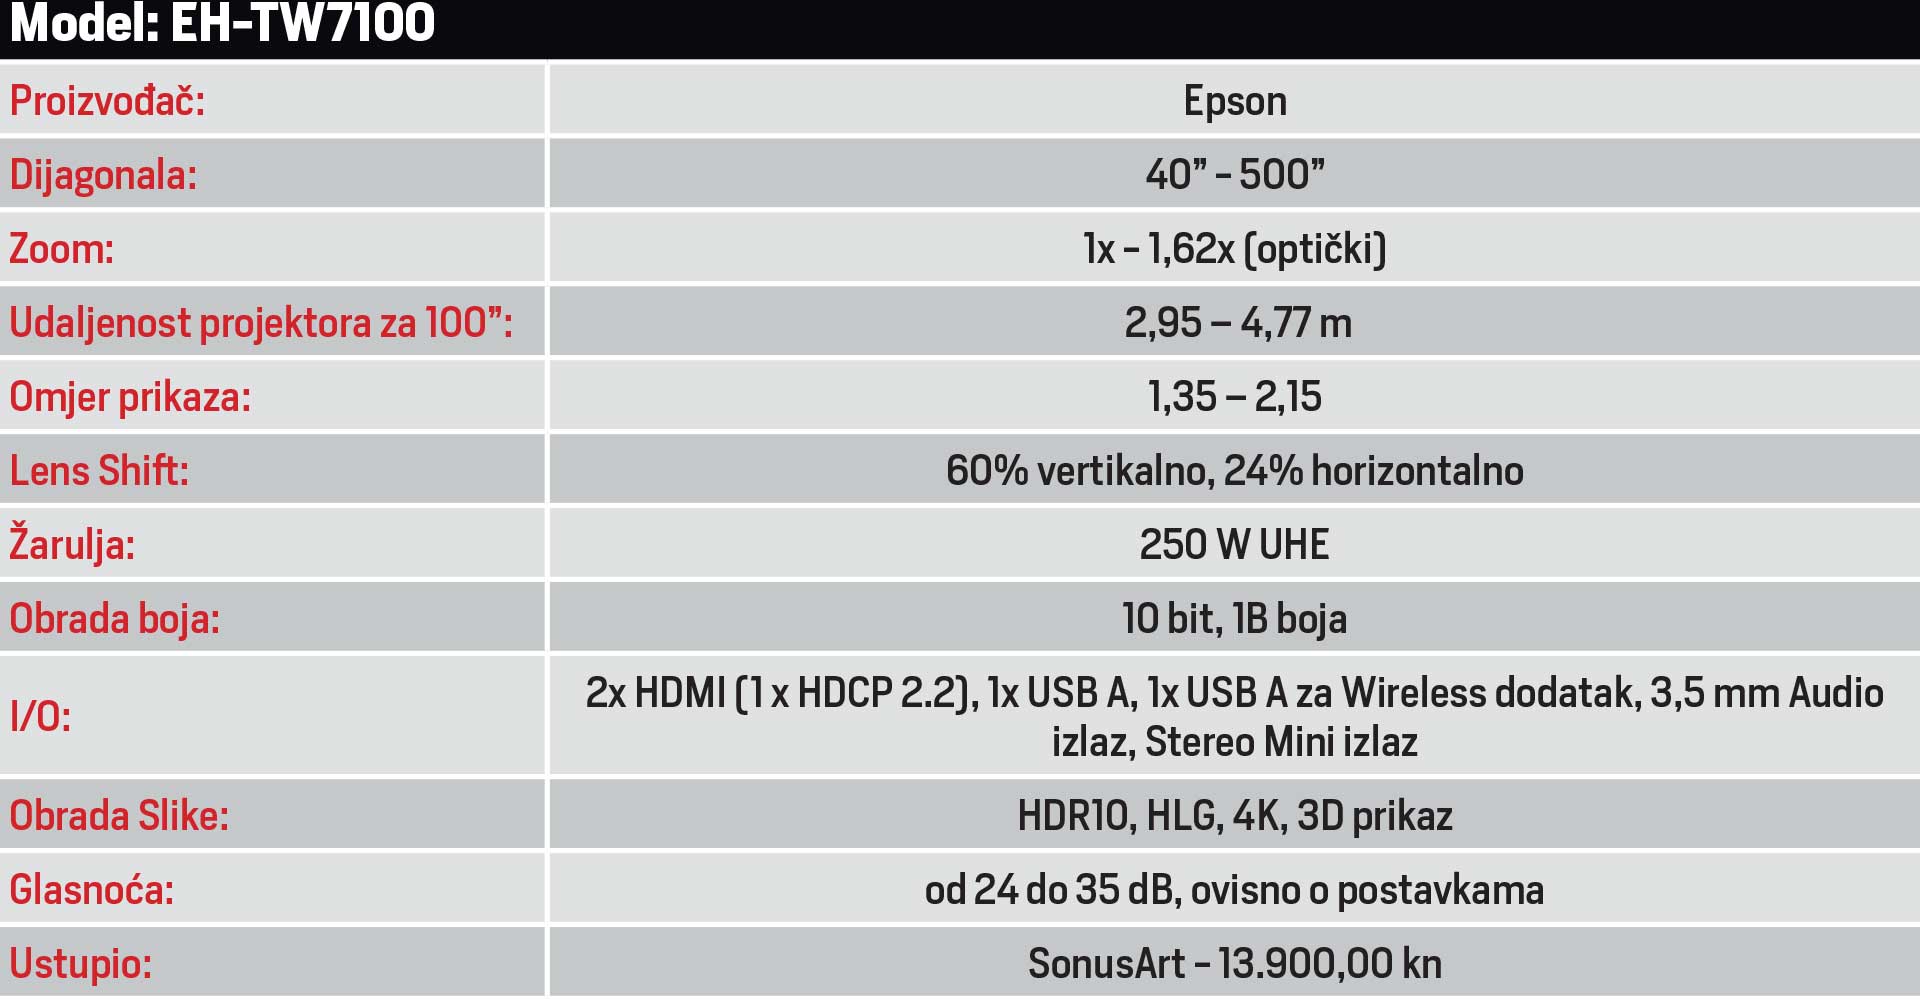 epson info box